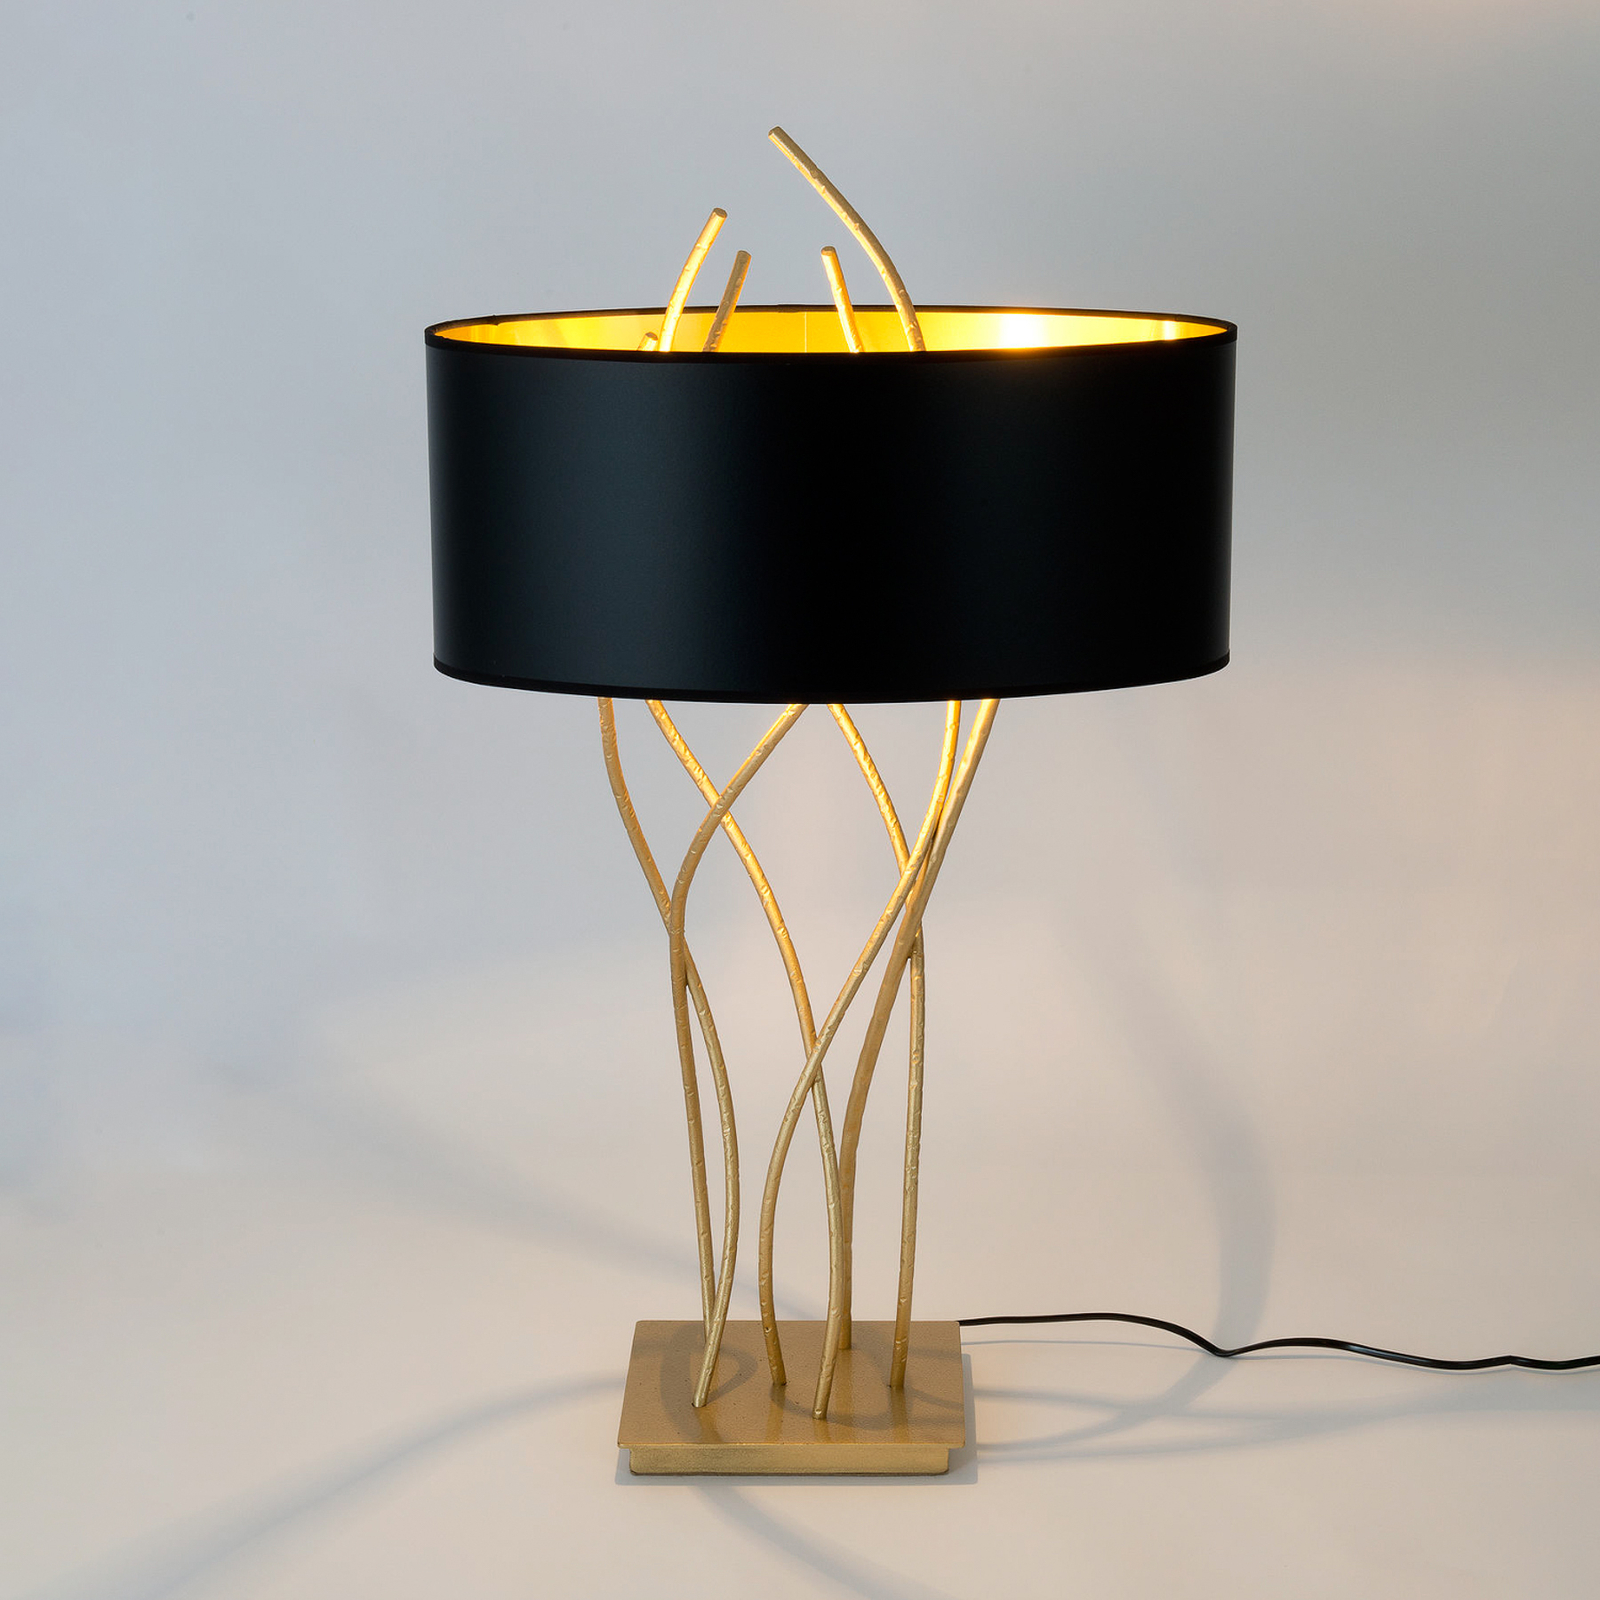 Lampe à poser Elba ovale, or/noir, hauteur 75 cm, fer